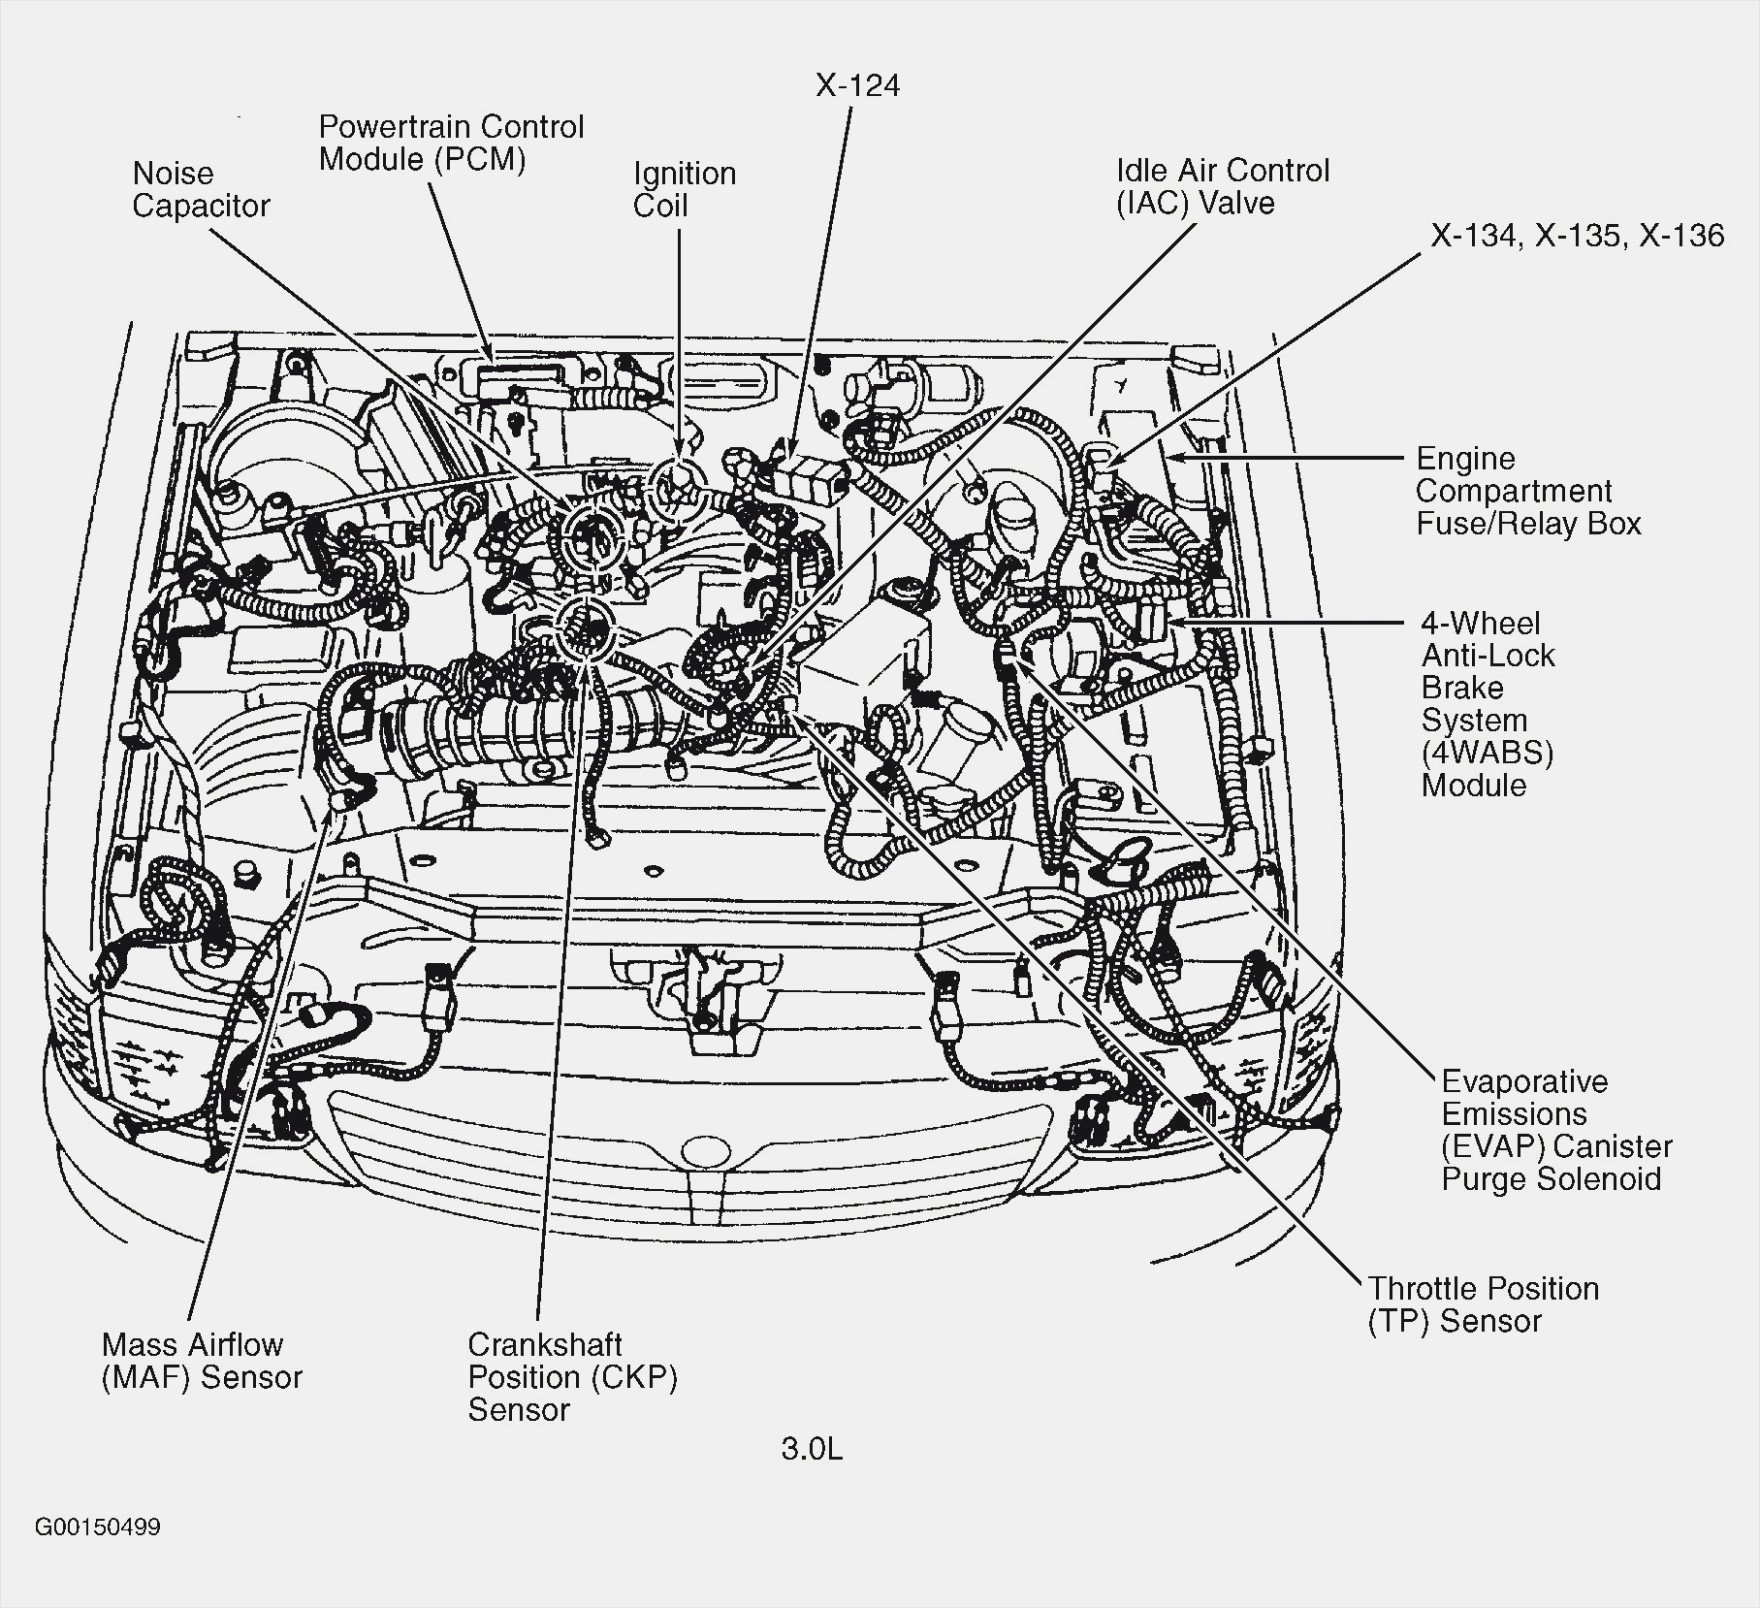 1996 Geo Prizm Engine Diagram 2001 Mazda Millenia Engine Diagram Wiring Diagram toolbox Of 1996 Geo Prizm Engine Diagram